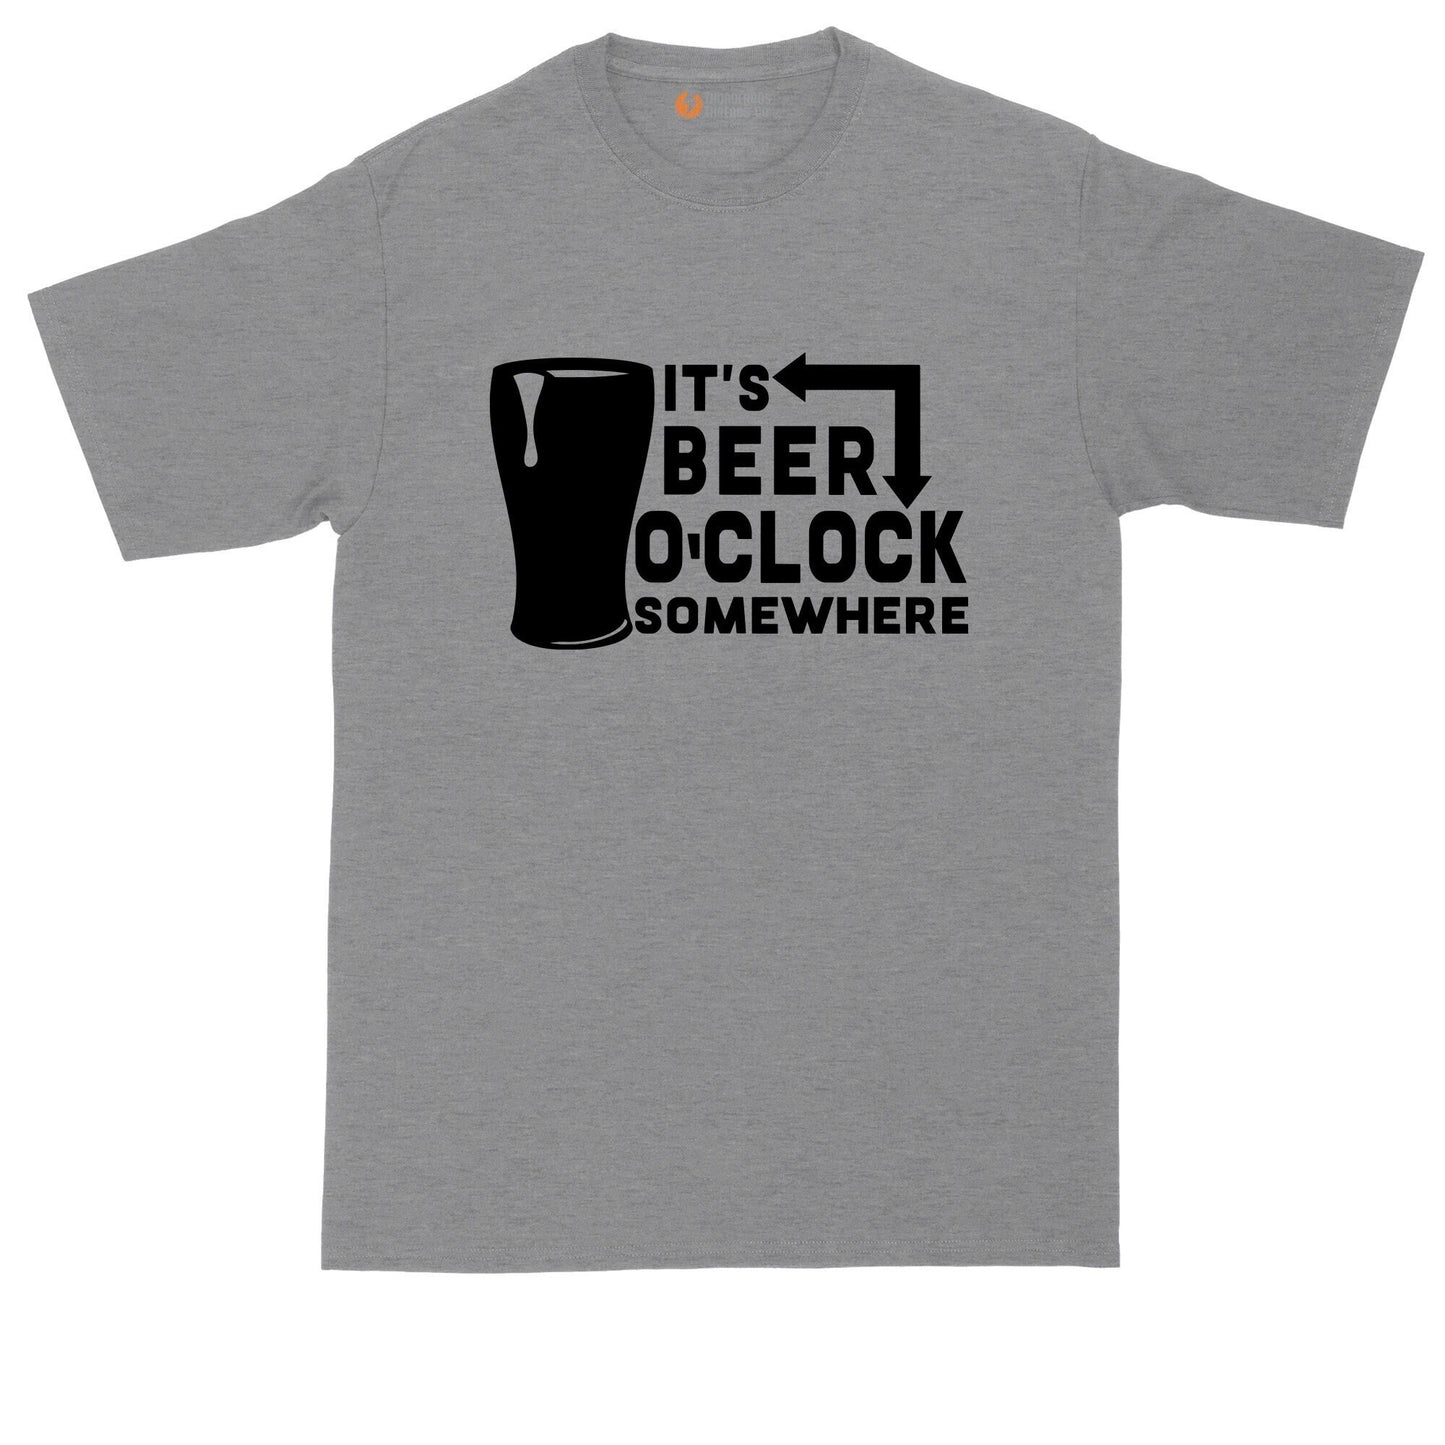 Wish You Were Beer | Mens Big & Tall T-Shirt